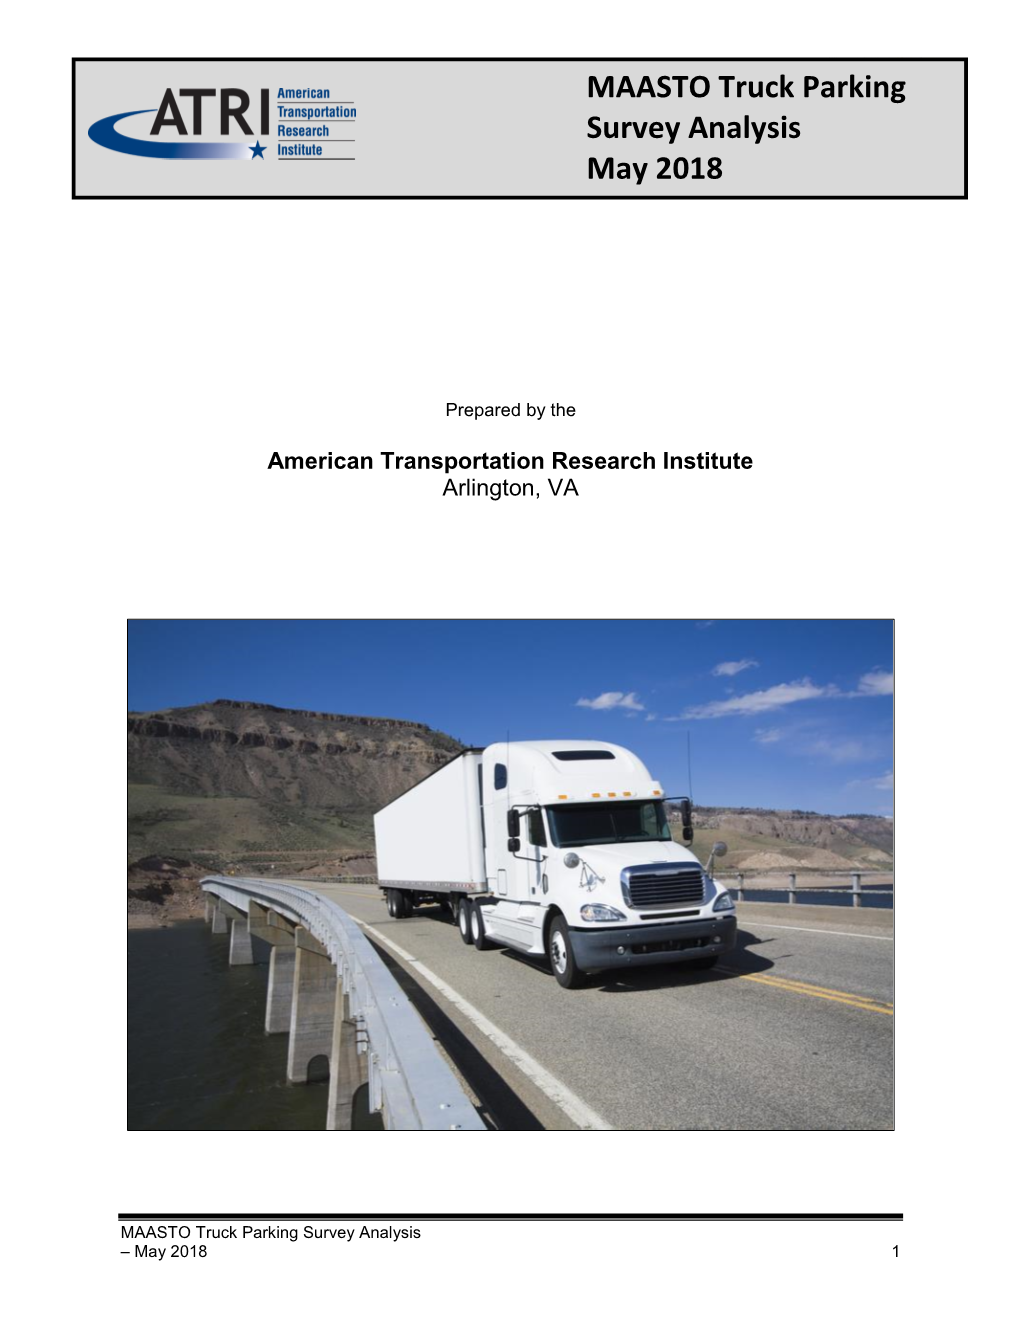 MAASTO Truck Parking Survey Analysis May 2018